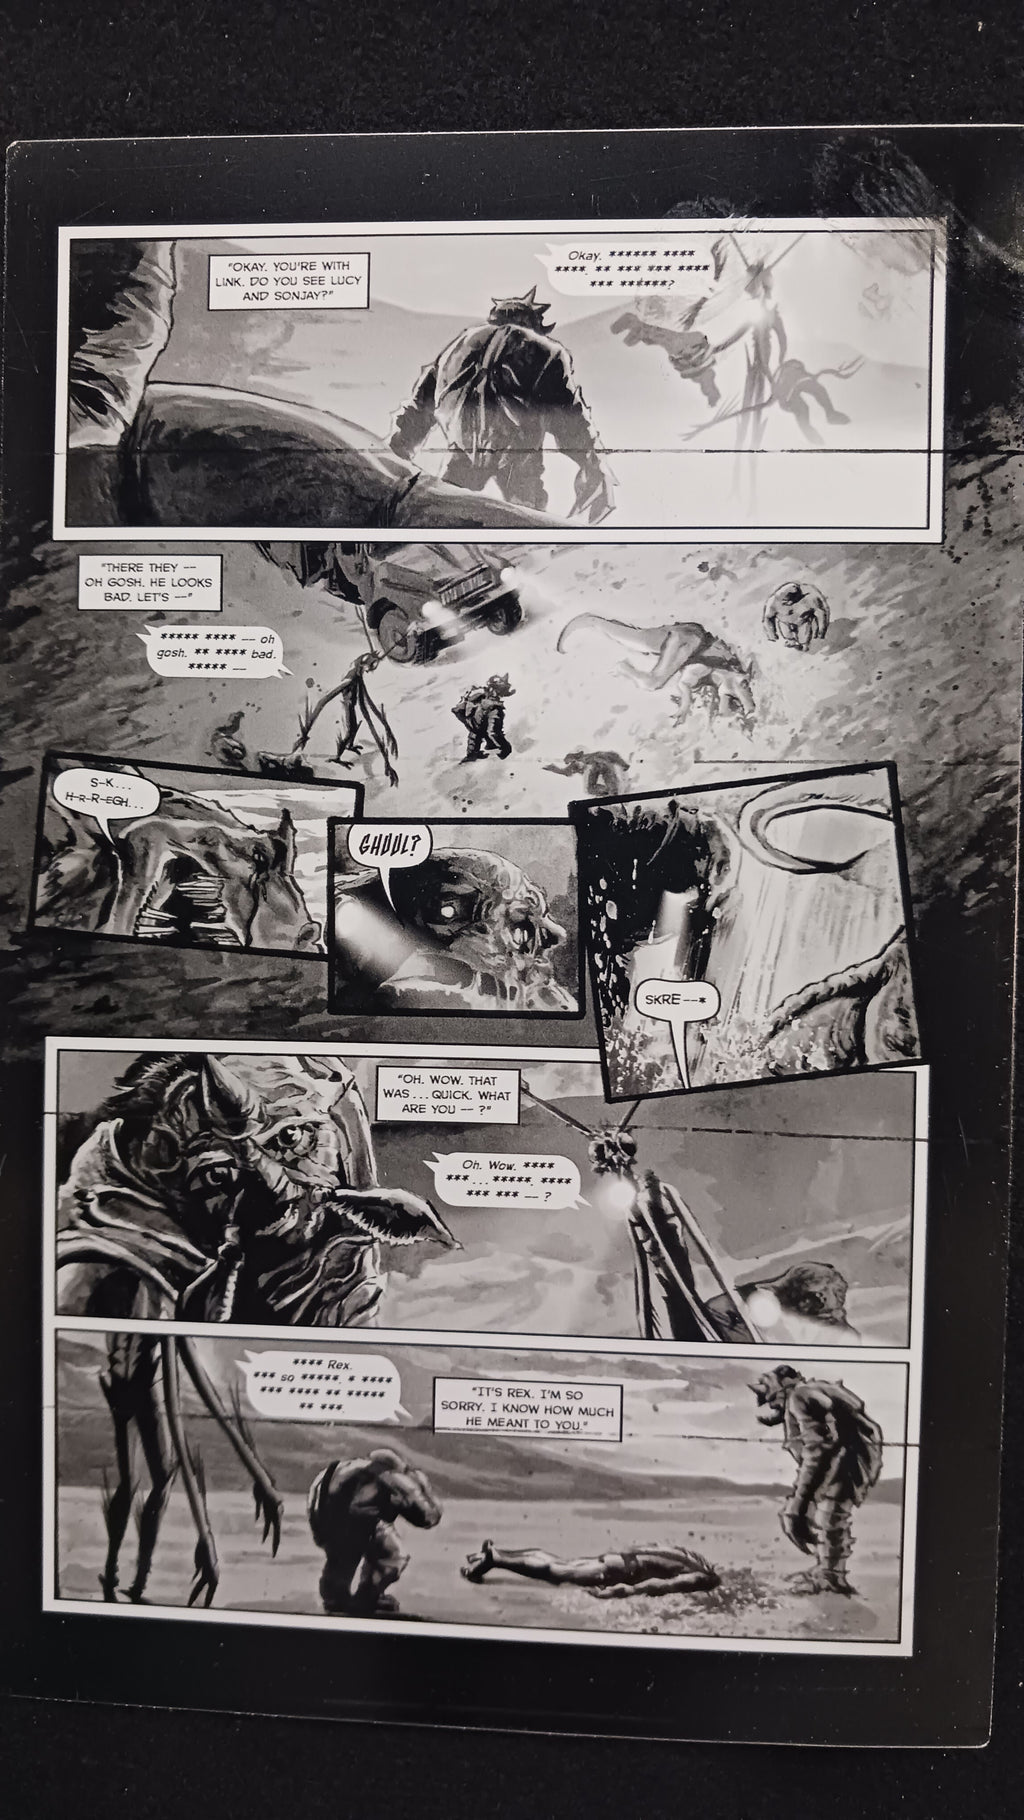 Behemoth #4 - Page 9  - PRESSWORKS - Comic Art - Printer Plate - Black